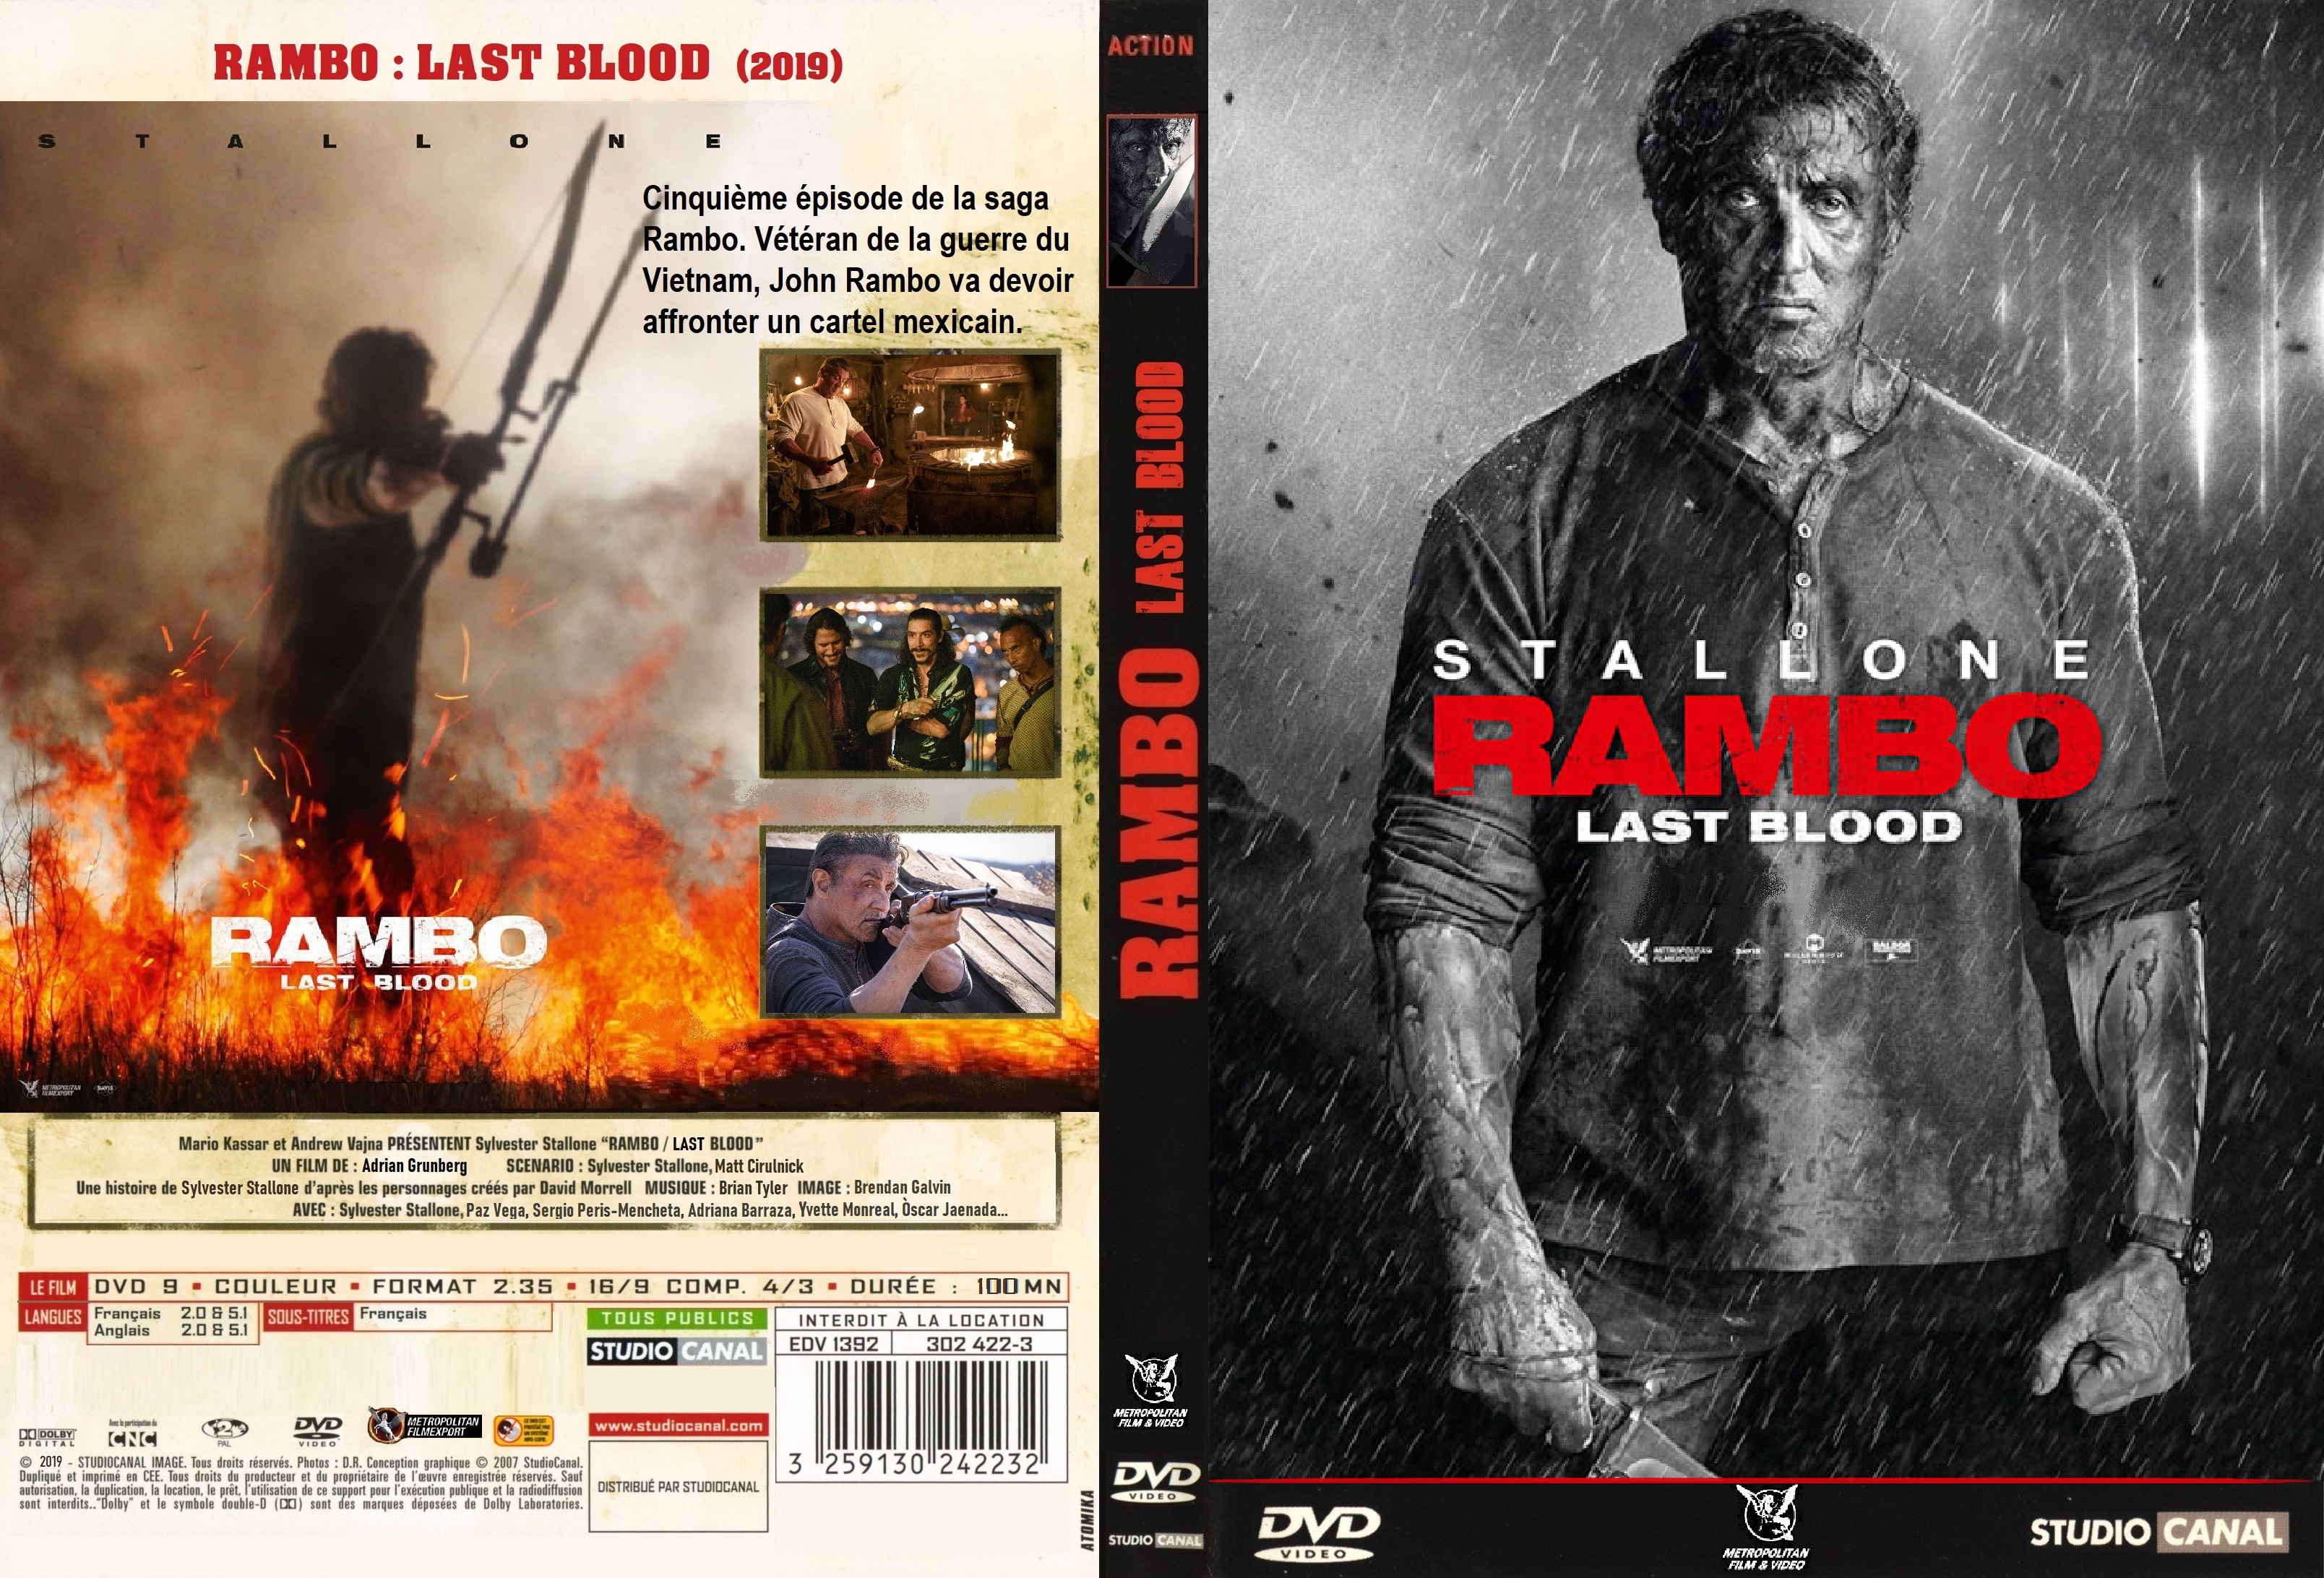 Jaquette DVD Rambo Last Blood custom v2